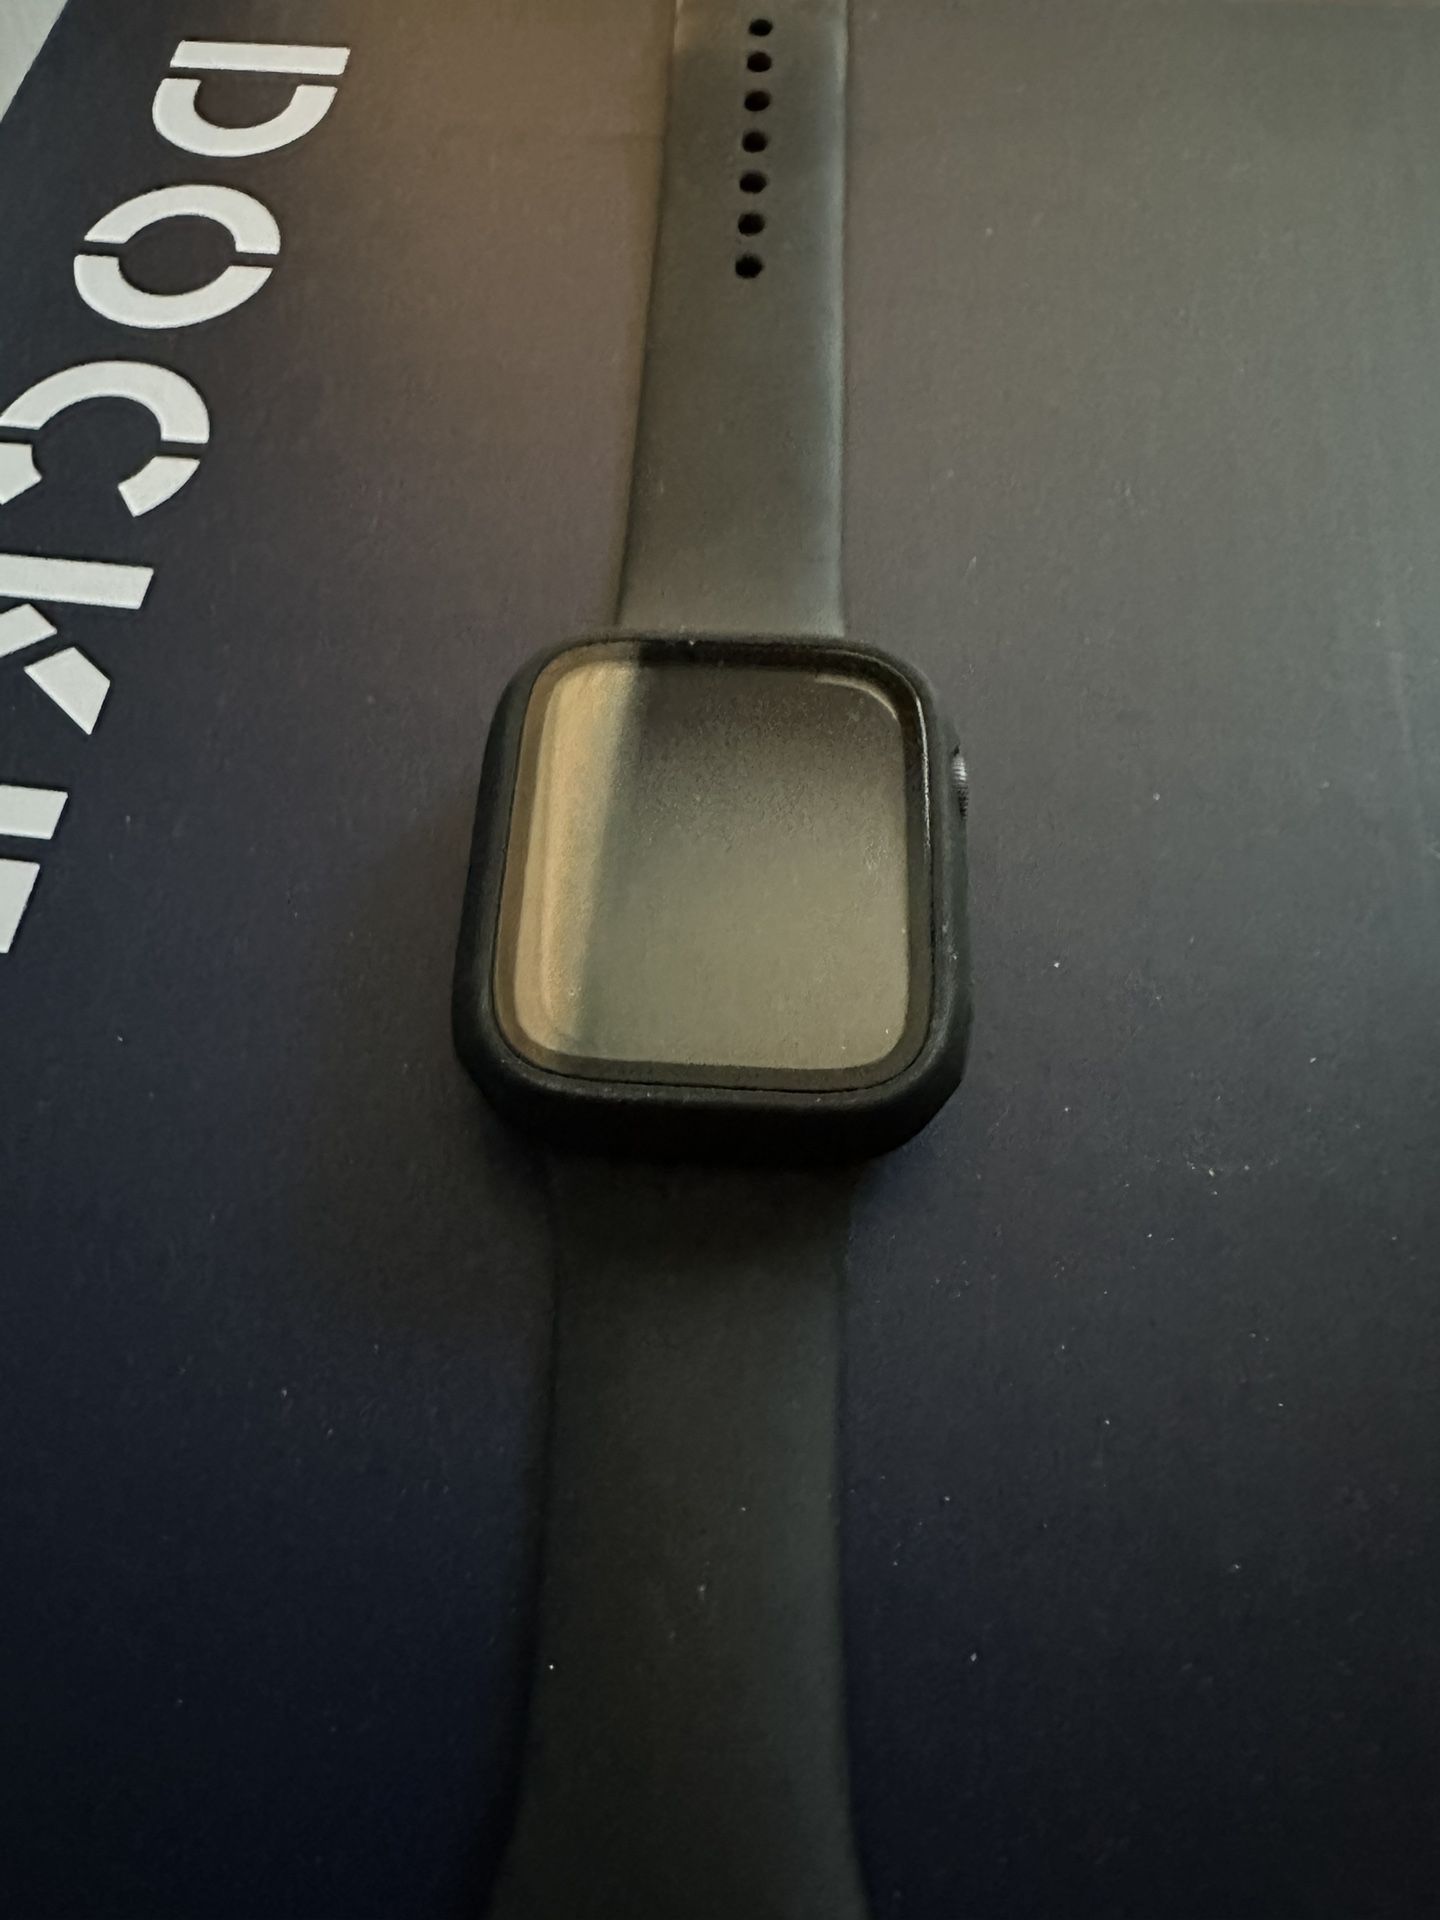 Apple Watch Series 6 w/GPS-Cellular